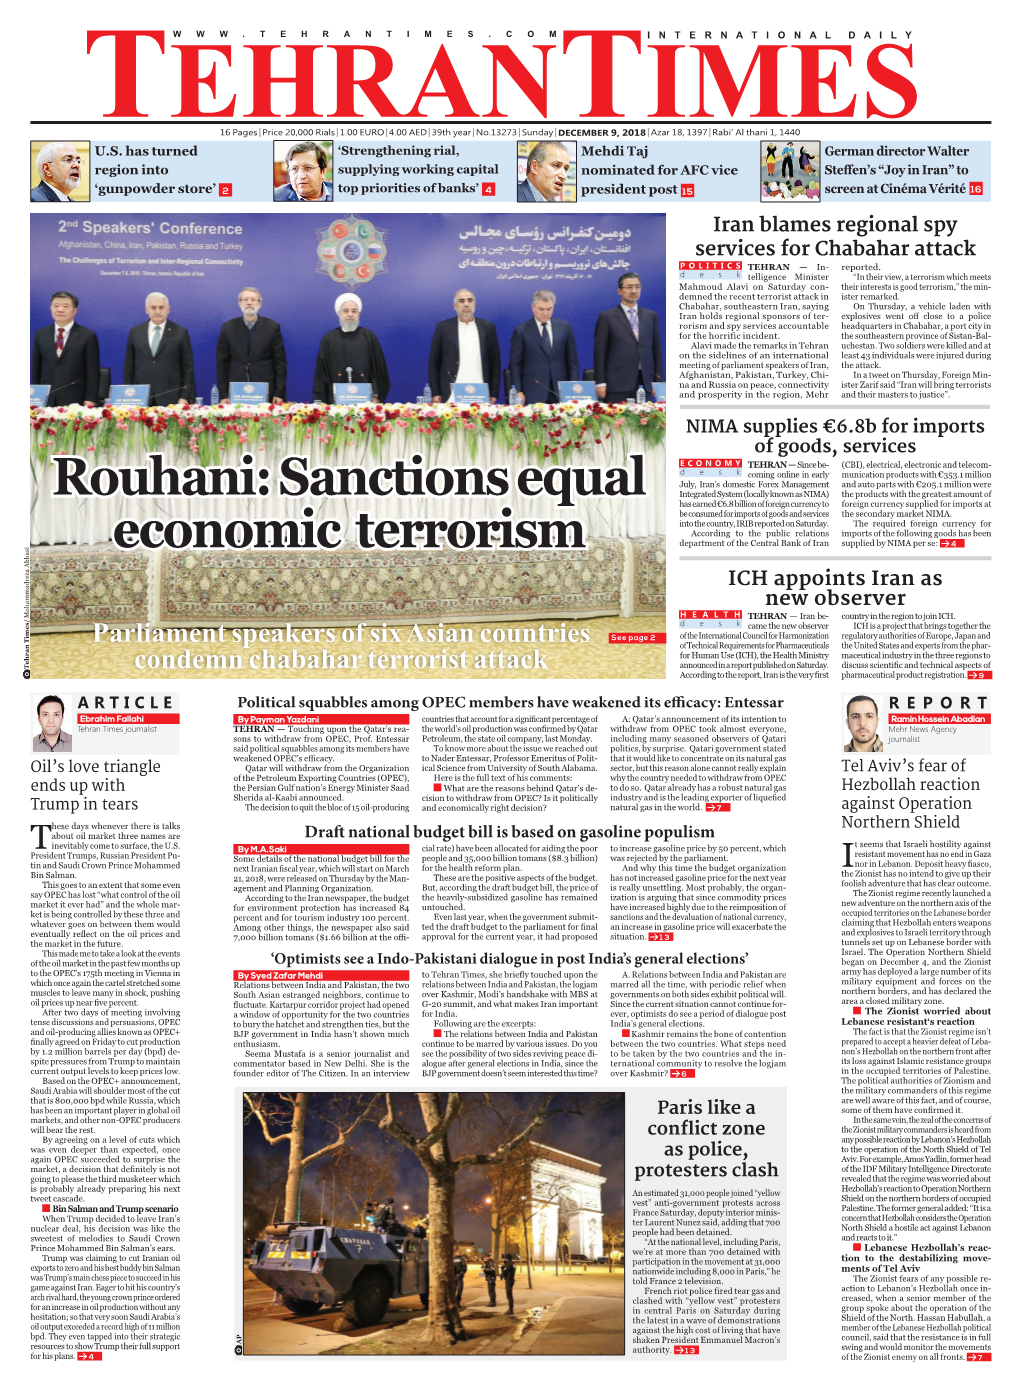 Rouhani: Sanctions Equal Economic Terrorism